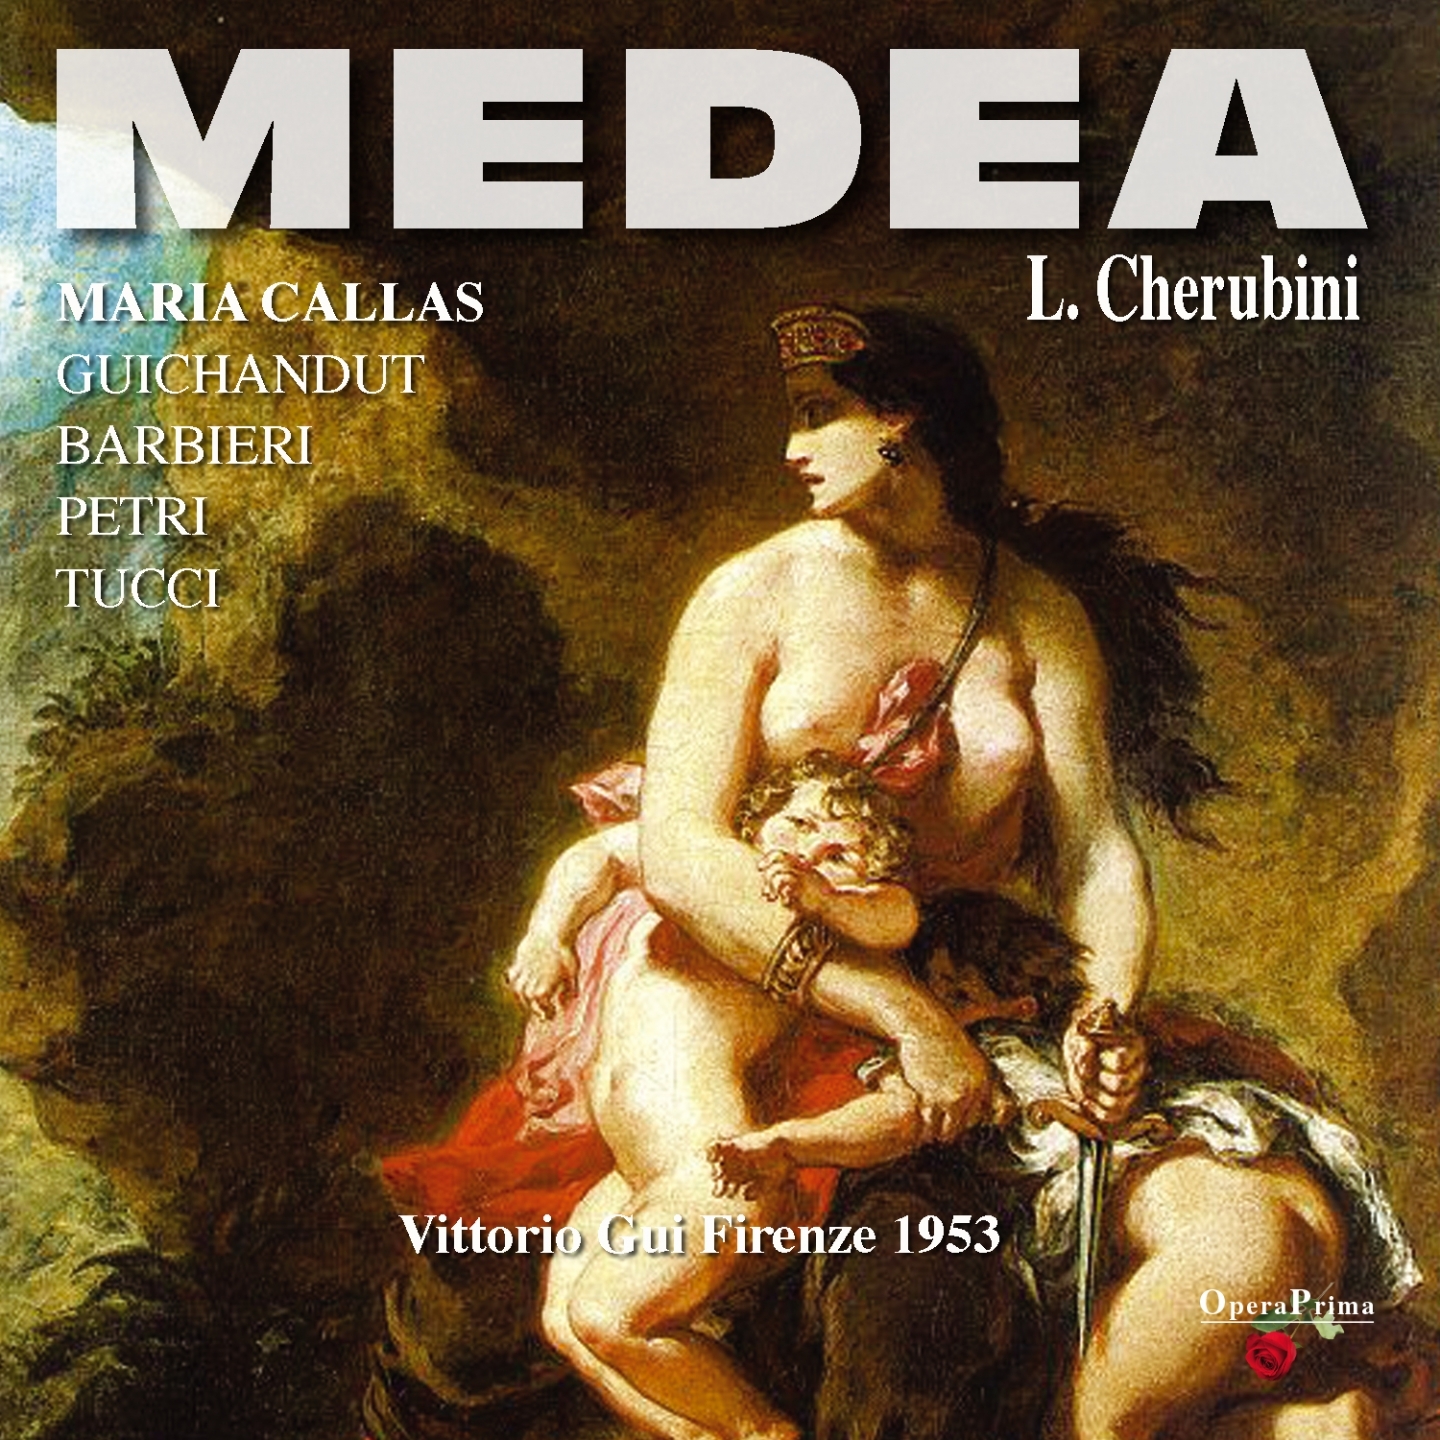 Medea : Act I  " Quaudo gia corona Amore"